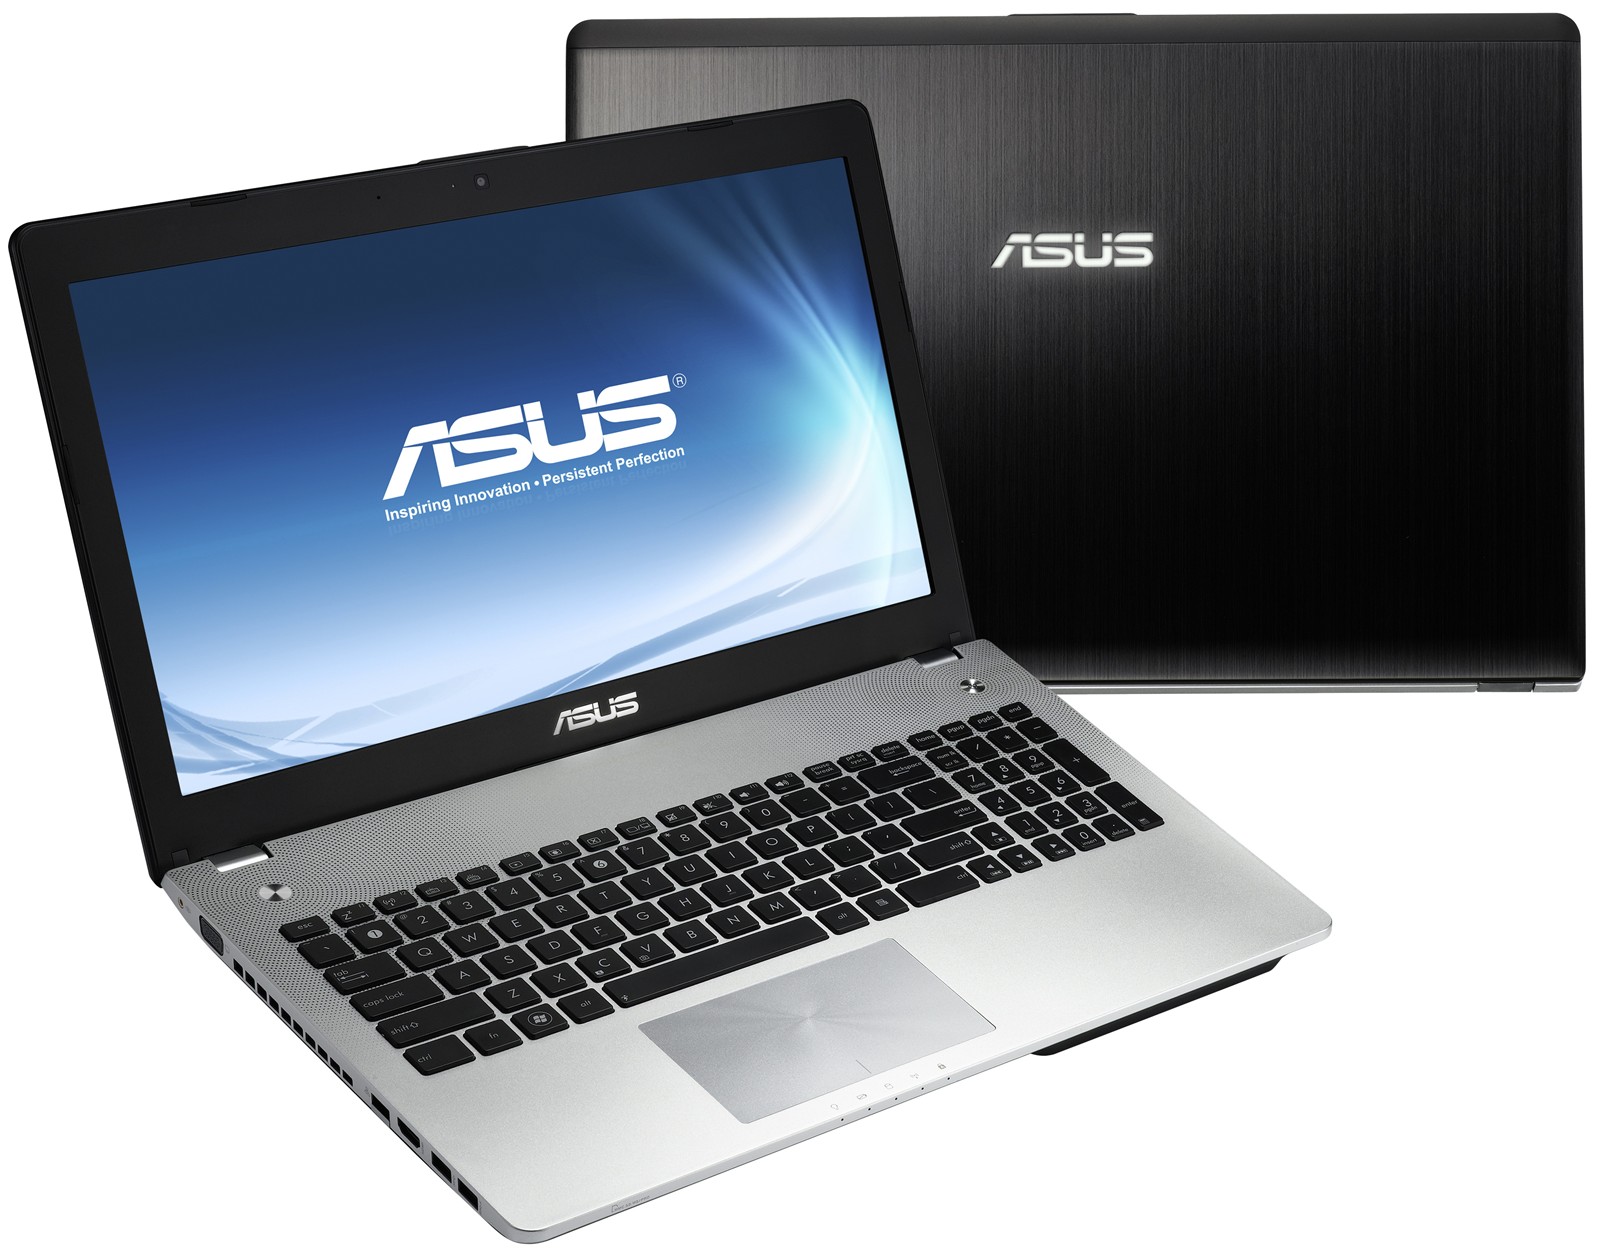 Asus N56VZ-DS71 Laptop details specs price  gadget buyer 